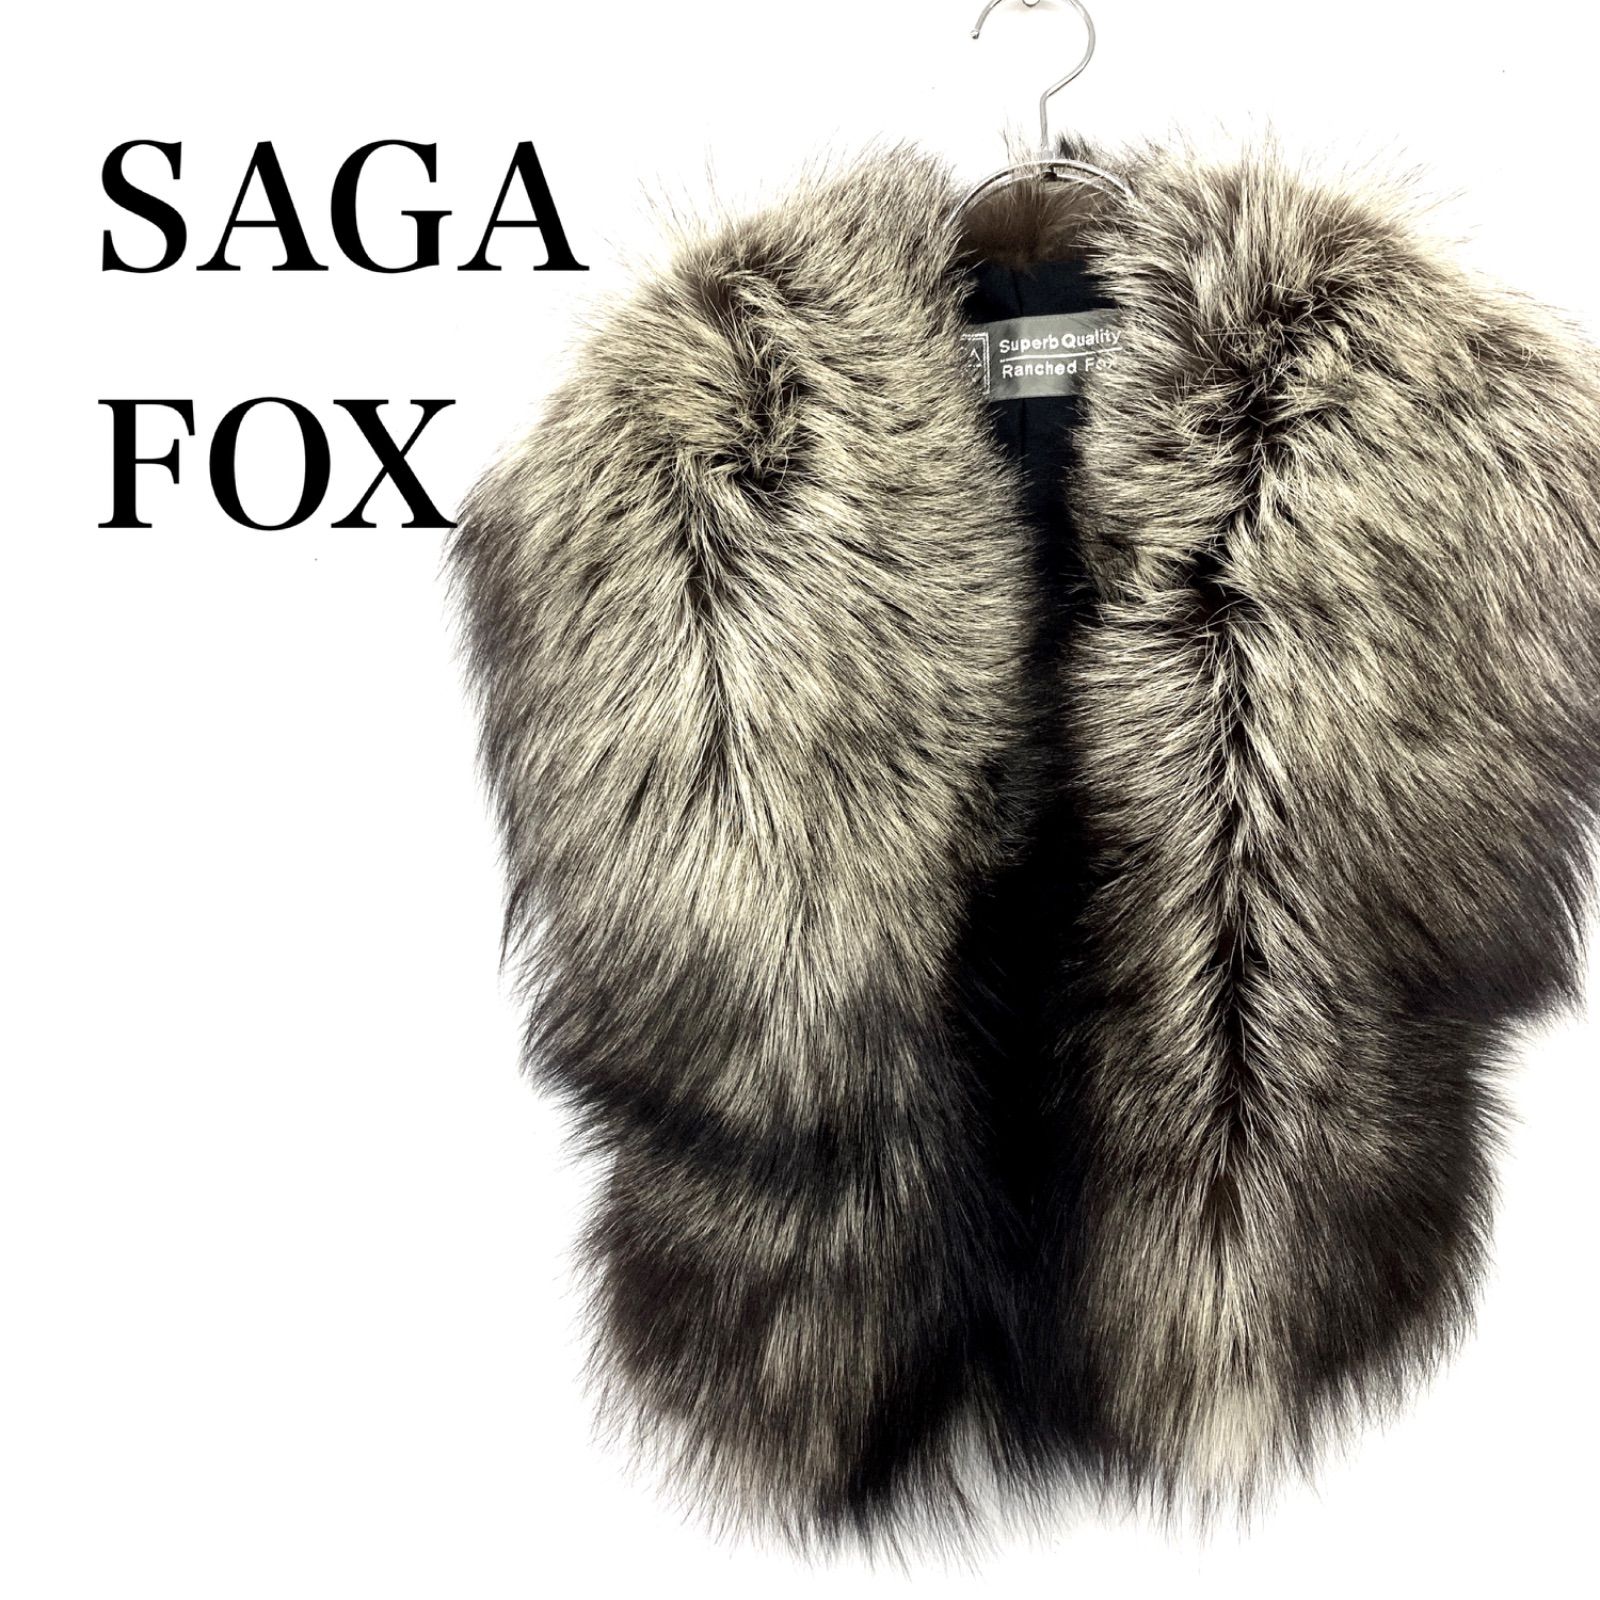 saga fox superb quality ranched fox リアルファー マフラー FOX